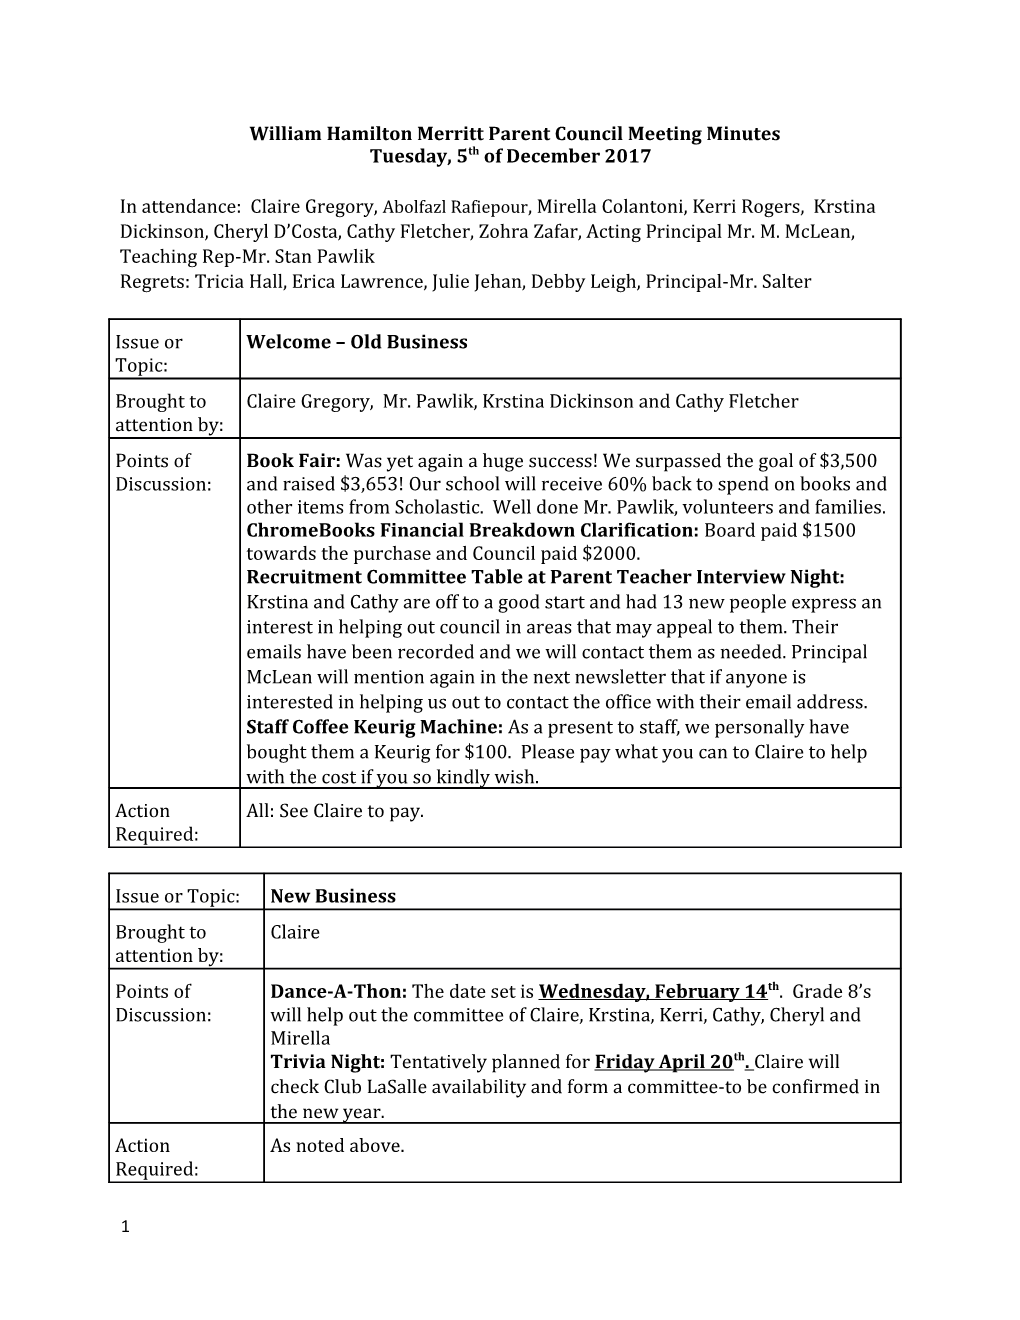 William Hamilton Merritt Parent Council Meeting Minutes Tuesday, 5Th of December 2017